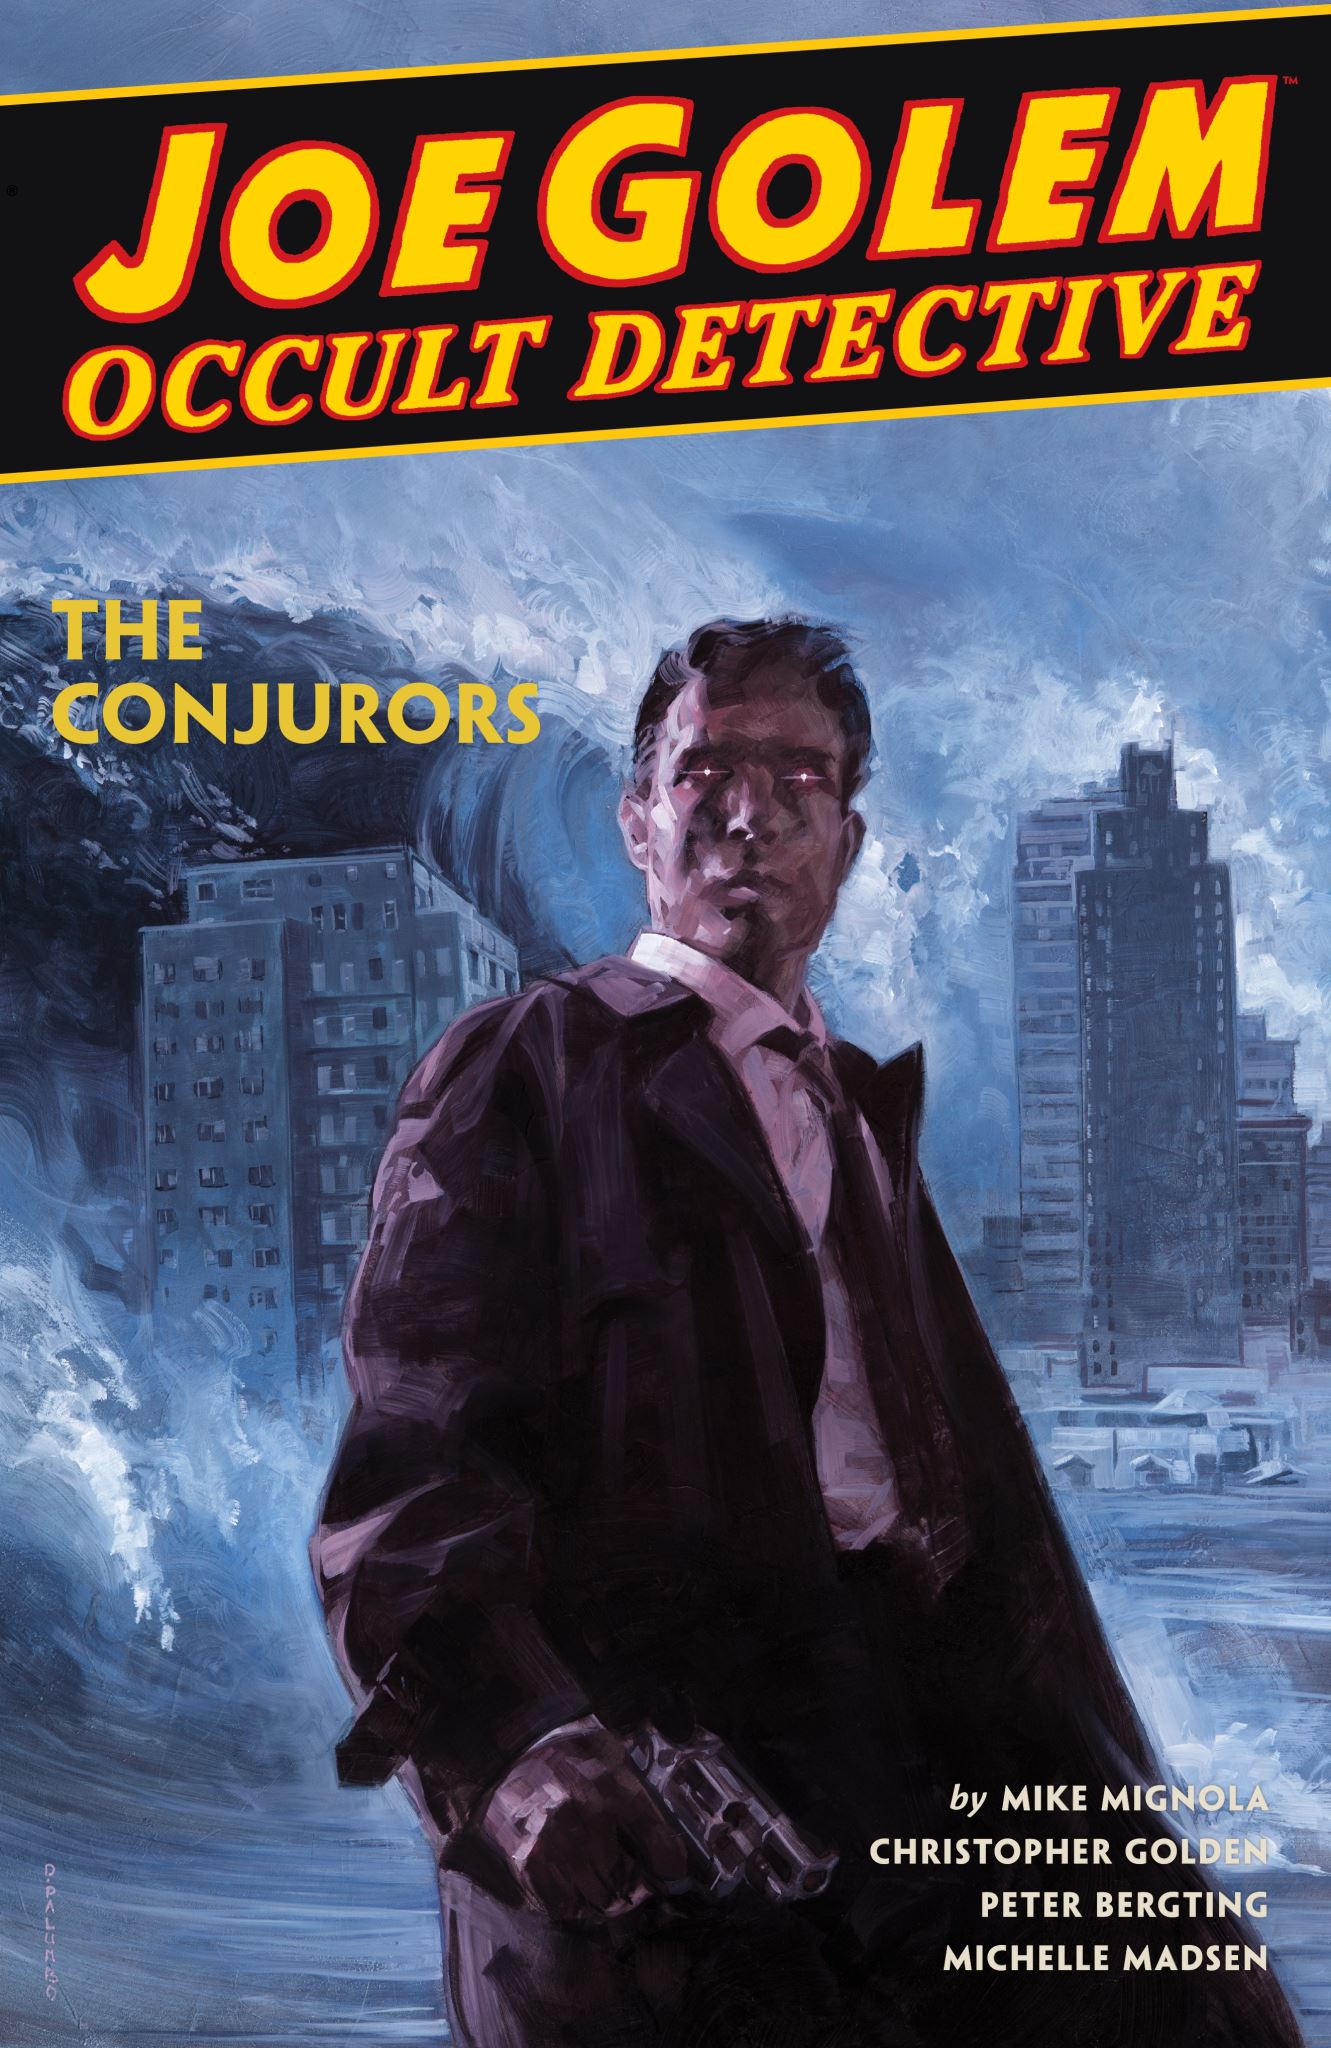 Joe Golem Occult Detective Volume 4--The Conjurors